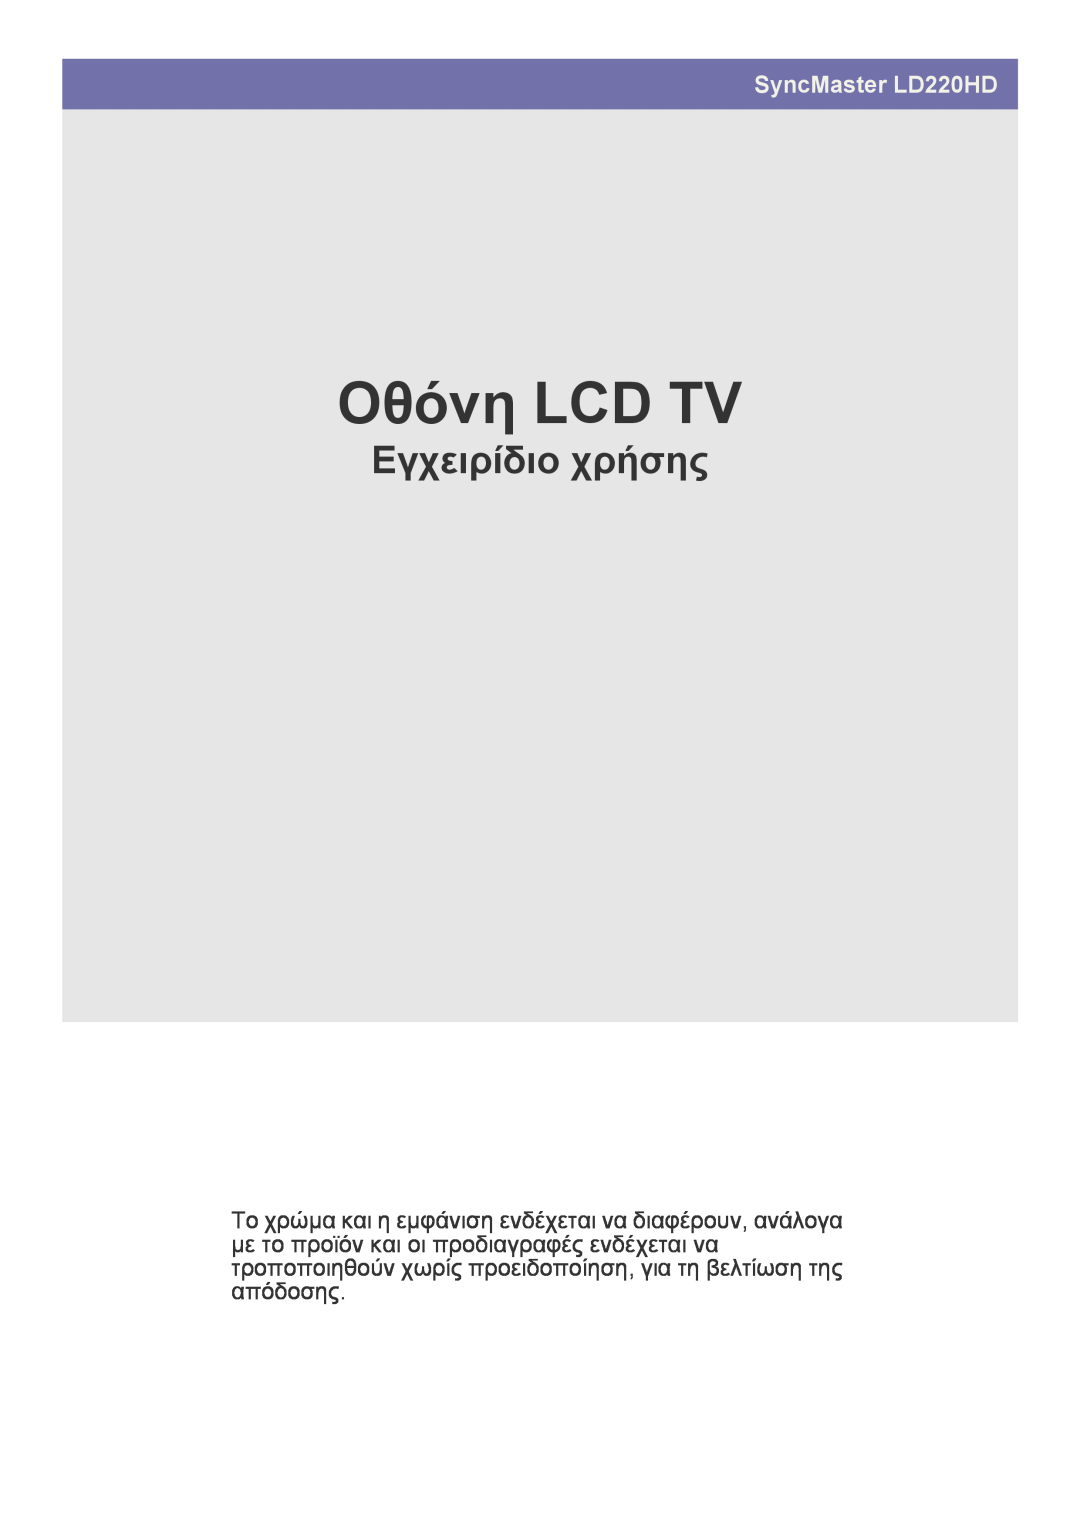 Samsung LS22FMDGF/XE, LS22FMDGF/EN manual Οθόνη LCD TV, Εγχειρίδιο χρήσης, SyncMaster LD220HD 